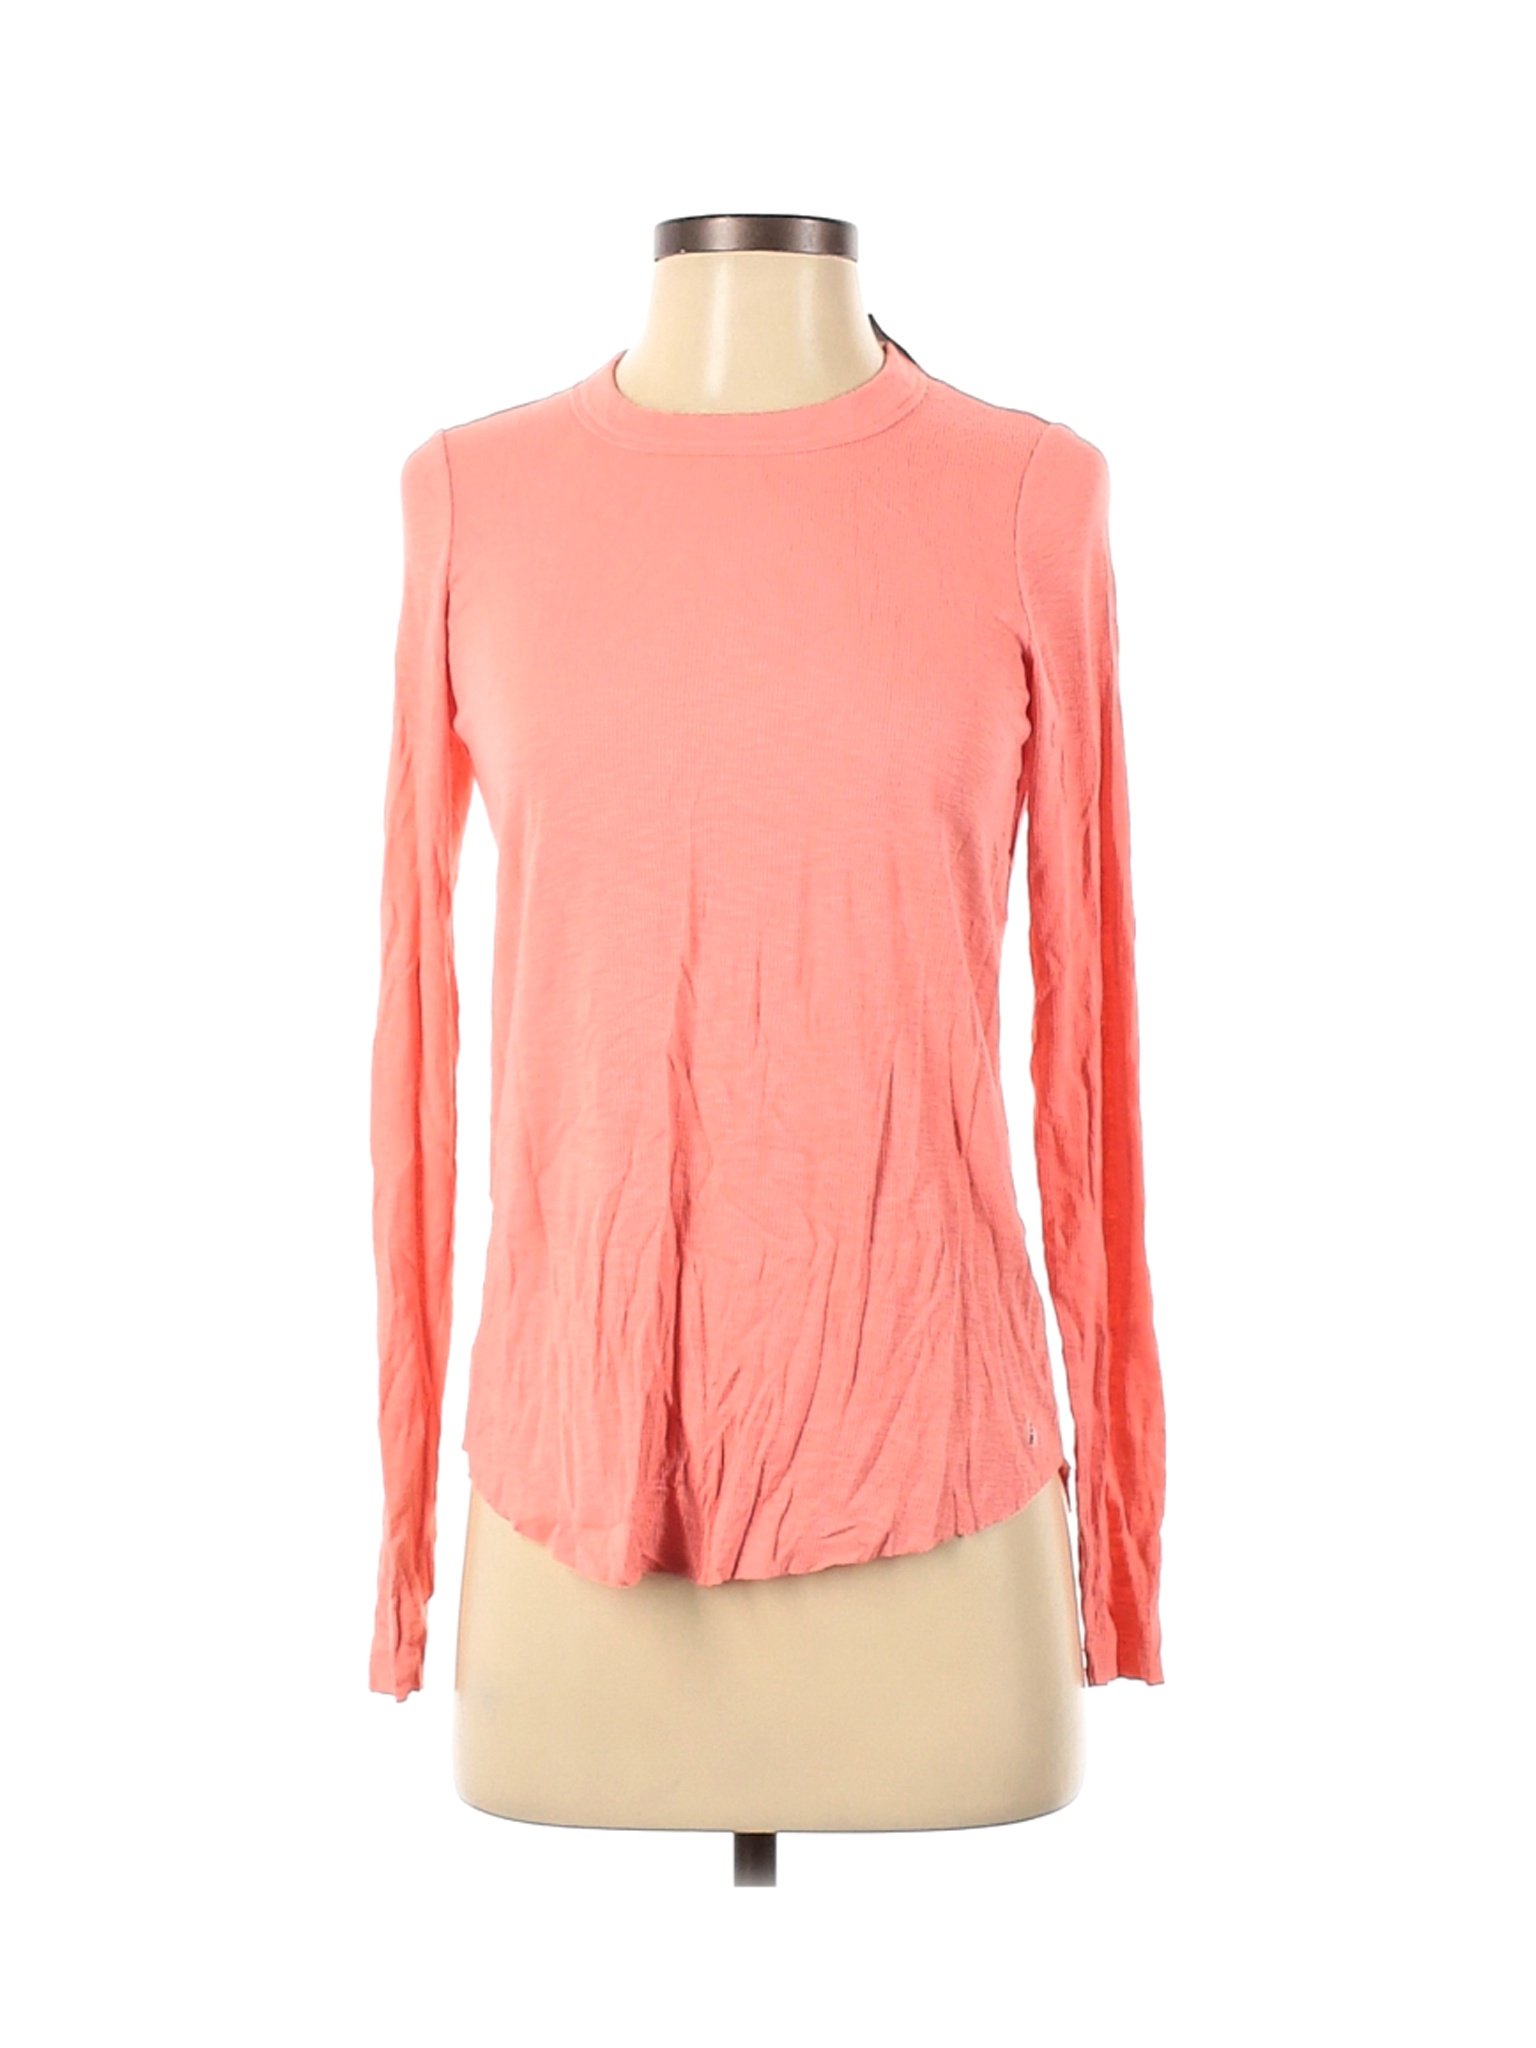 NWT Aerie Women Pink Long Sleeve T-Shirt S | eBay